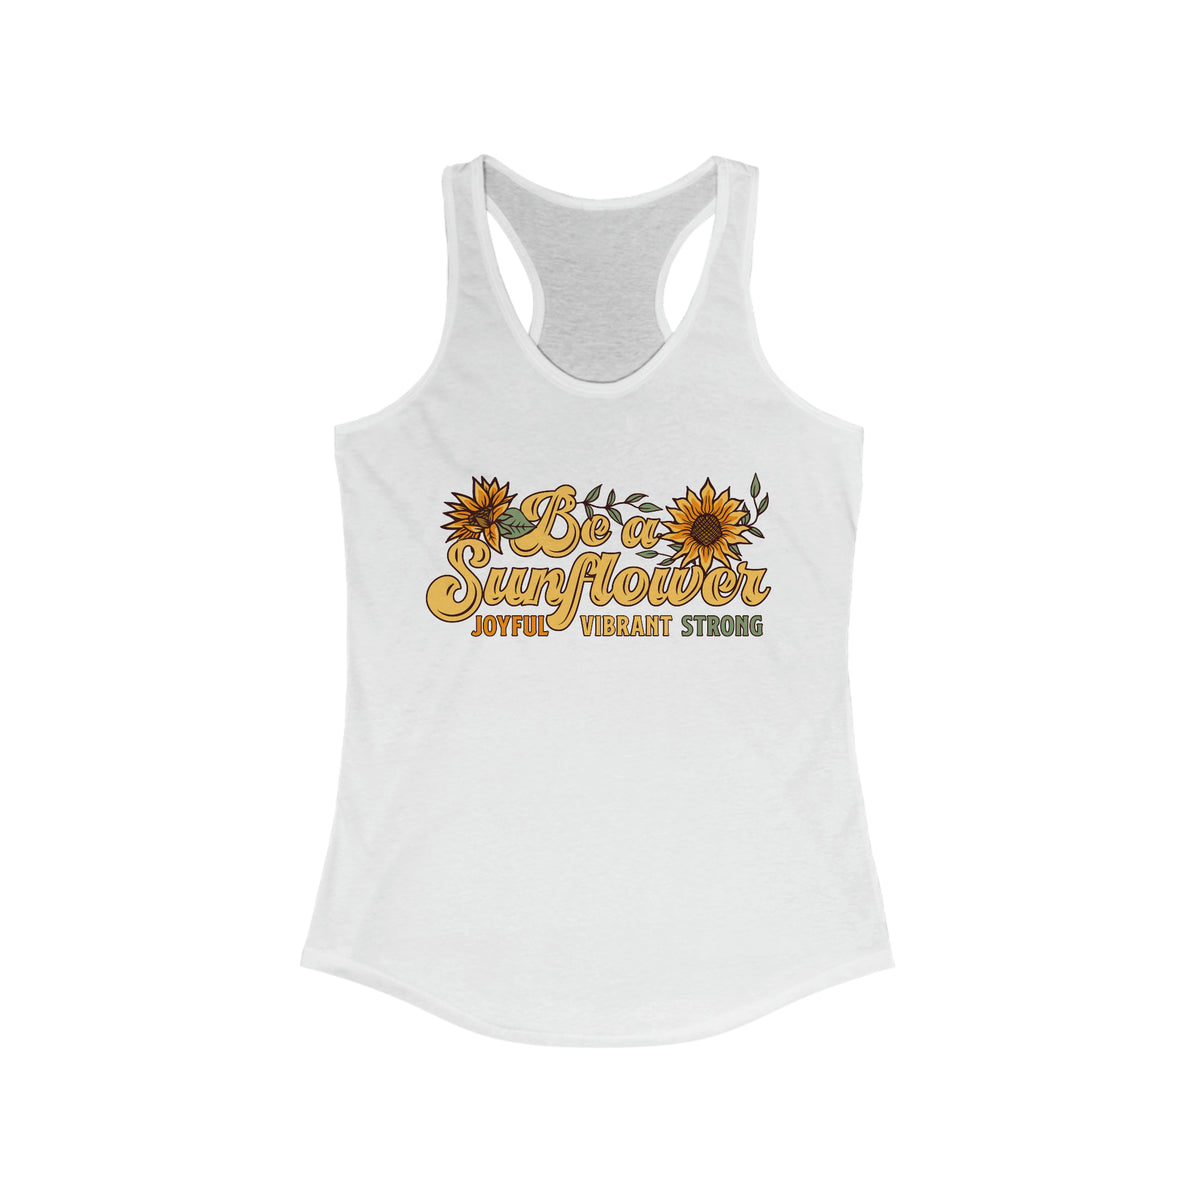 Be a Sunflower Girl Power Sunflower Shirt | Plant Lady Psychologist Gift | Women's Ideal Racerback Tank Top